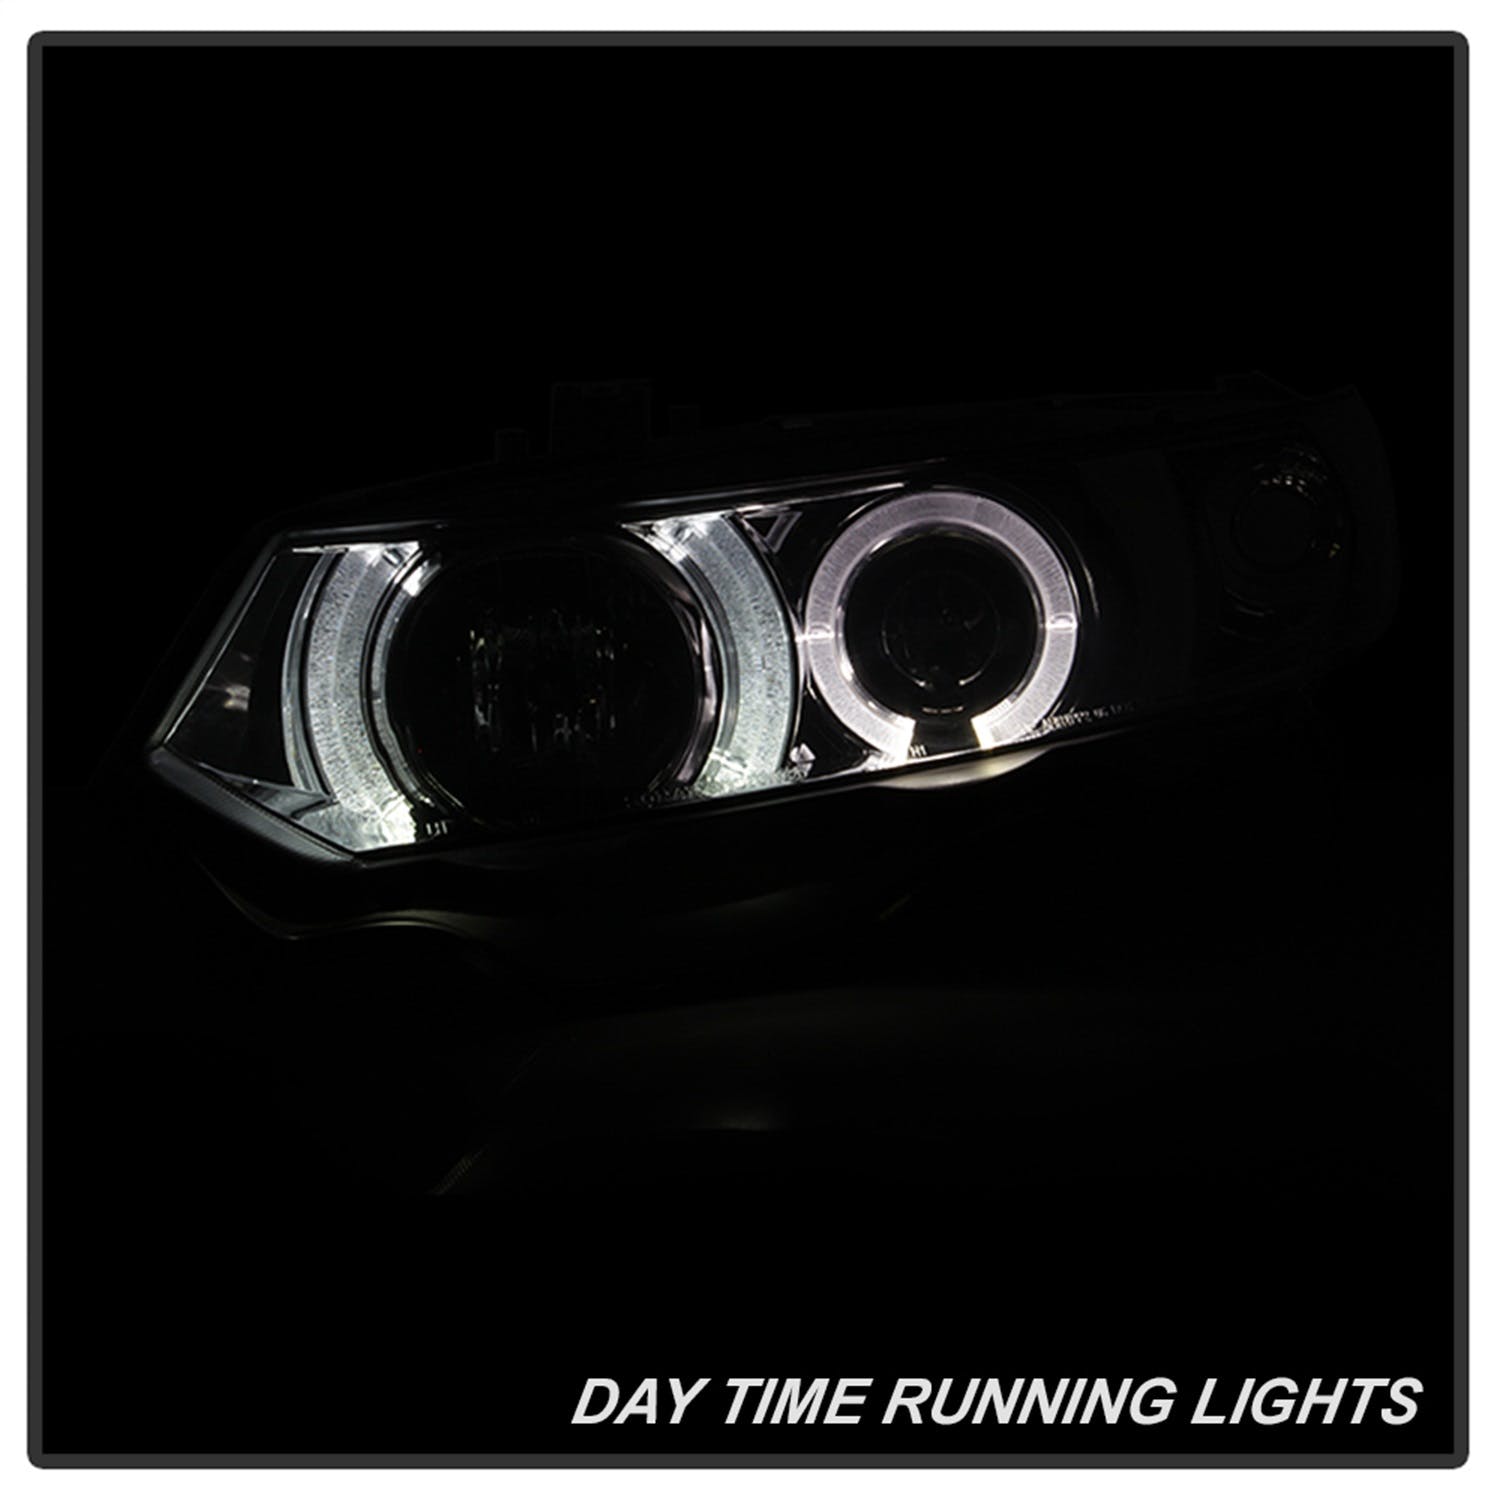 Spyder Auto 5037510 (Spyder) Honda Civic 06-08 2Dr Projector Headlights-LED Halo-Smoke-High H1 (Incl